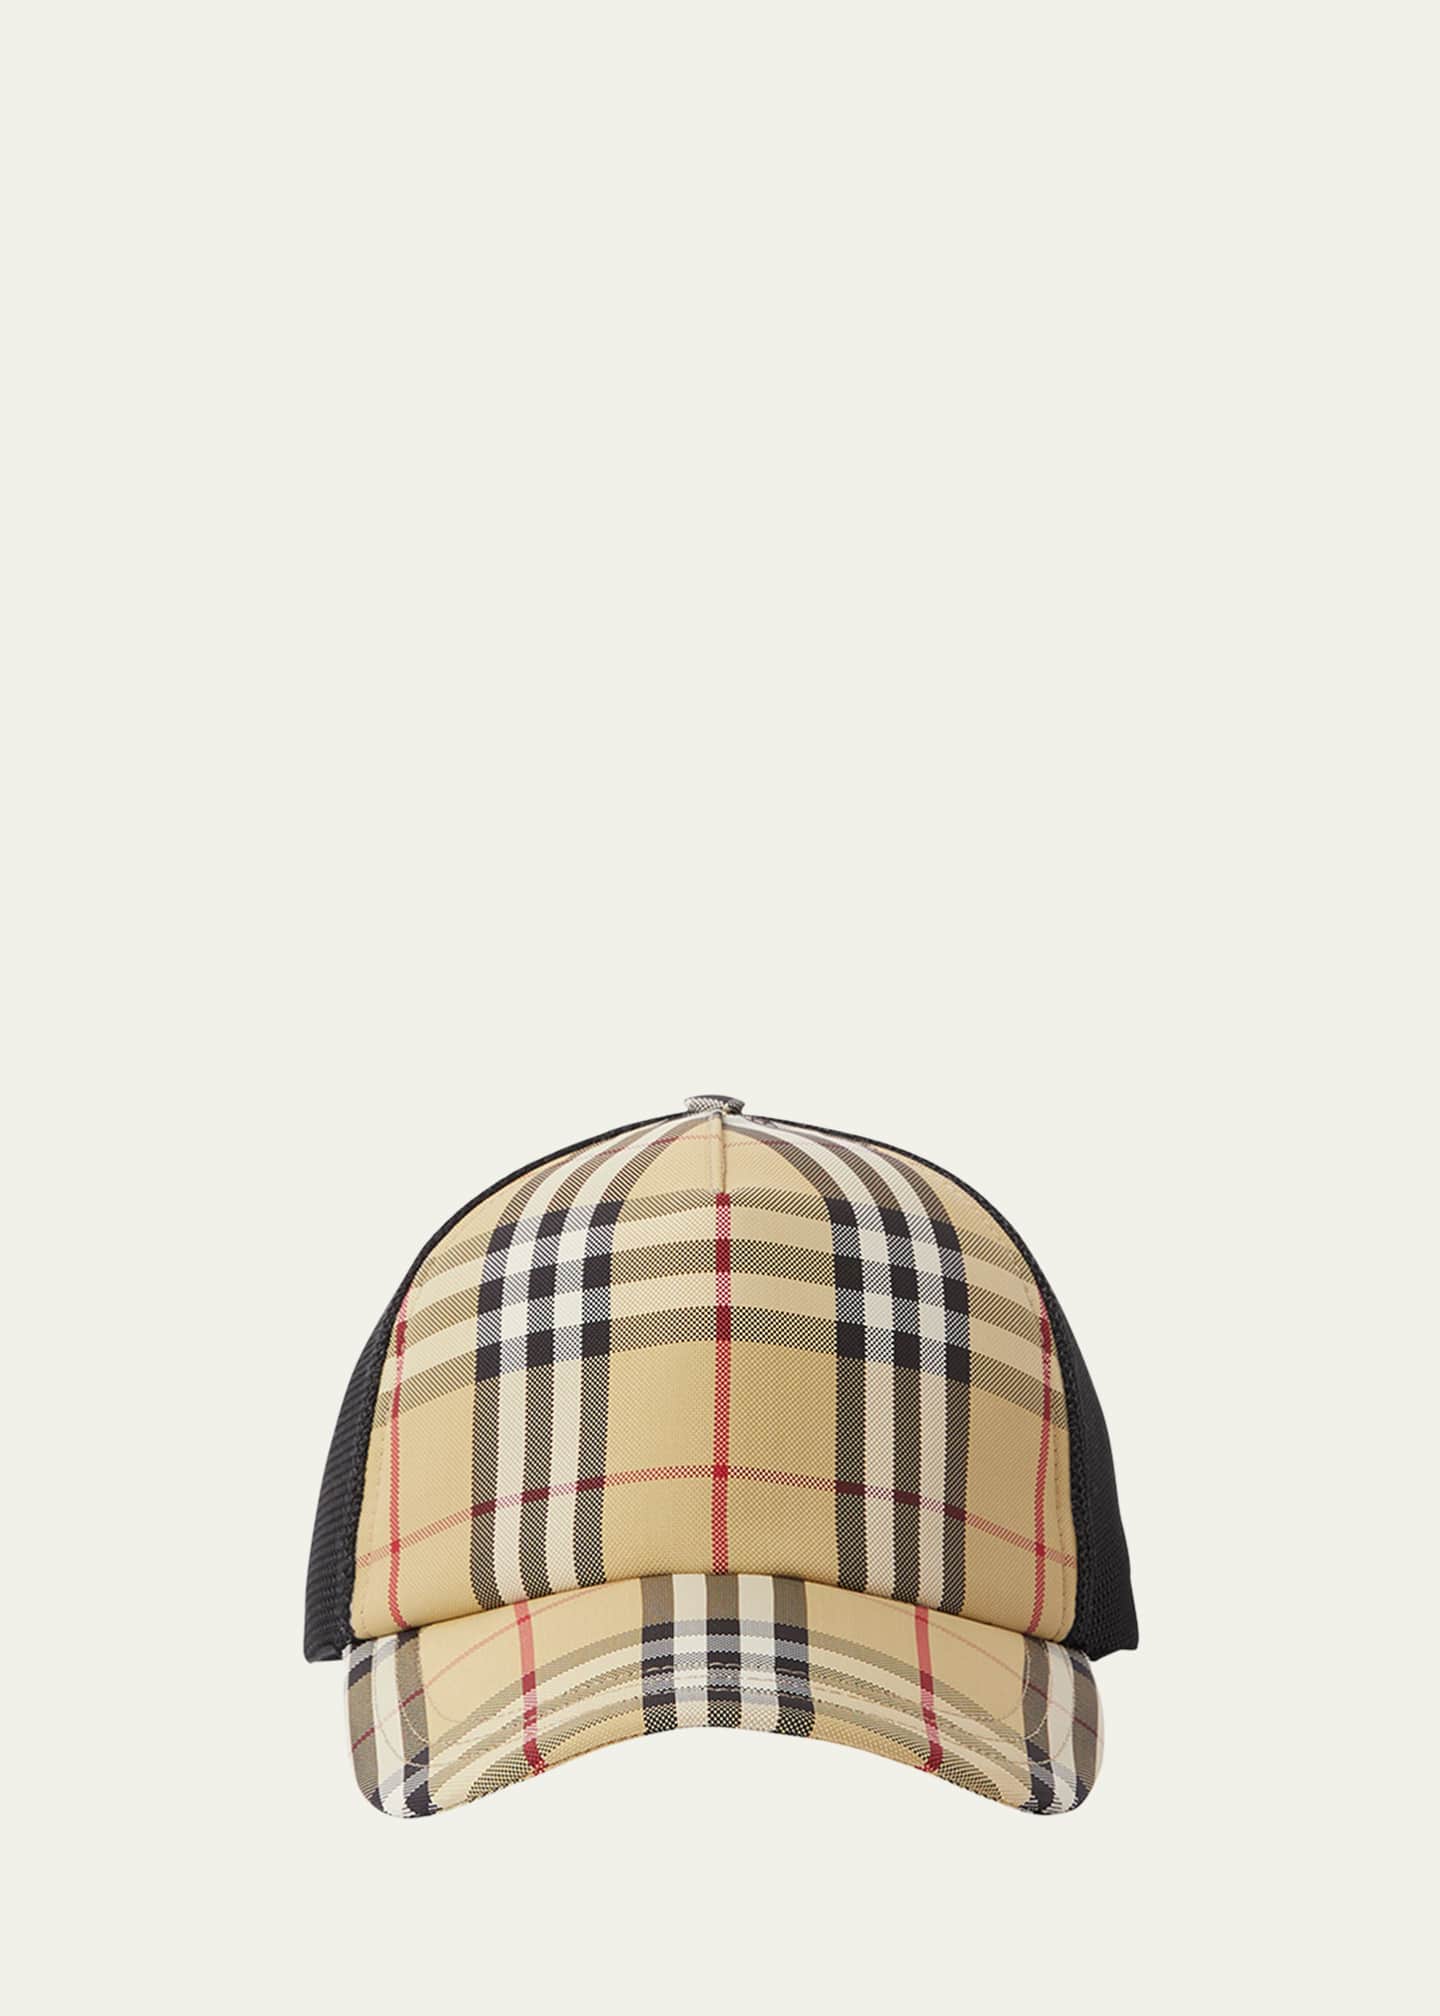 Burberry Men's Vintage Check Trucker Hat - Goodman